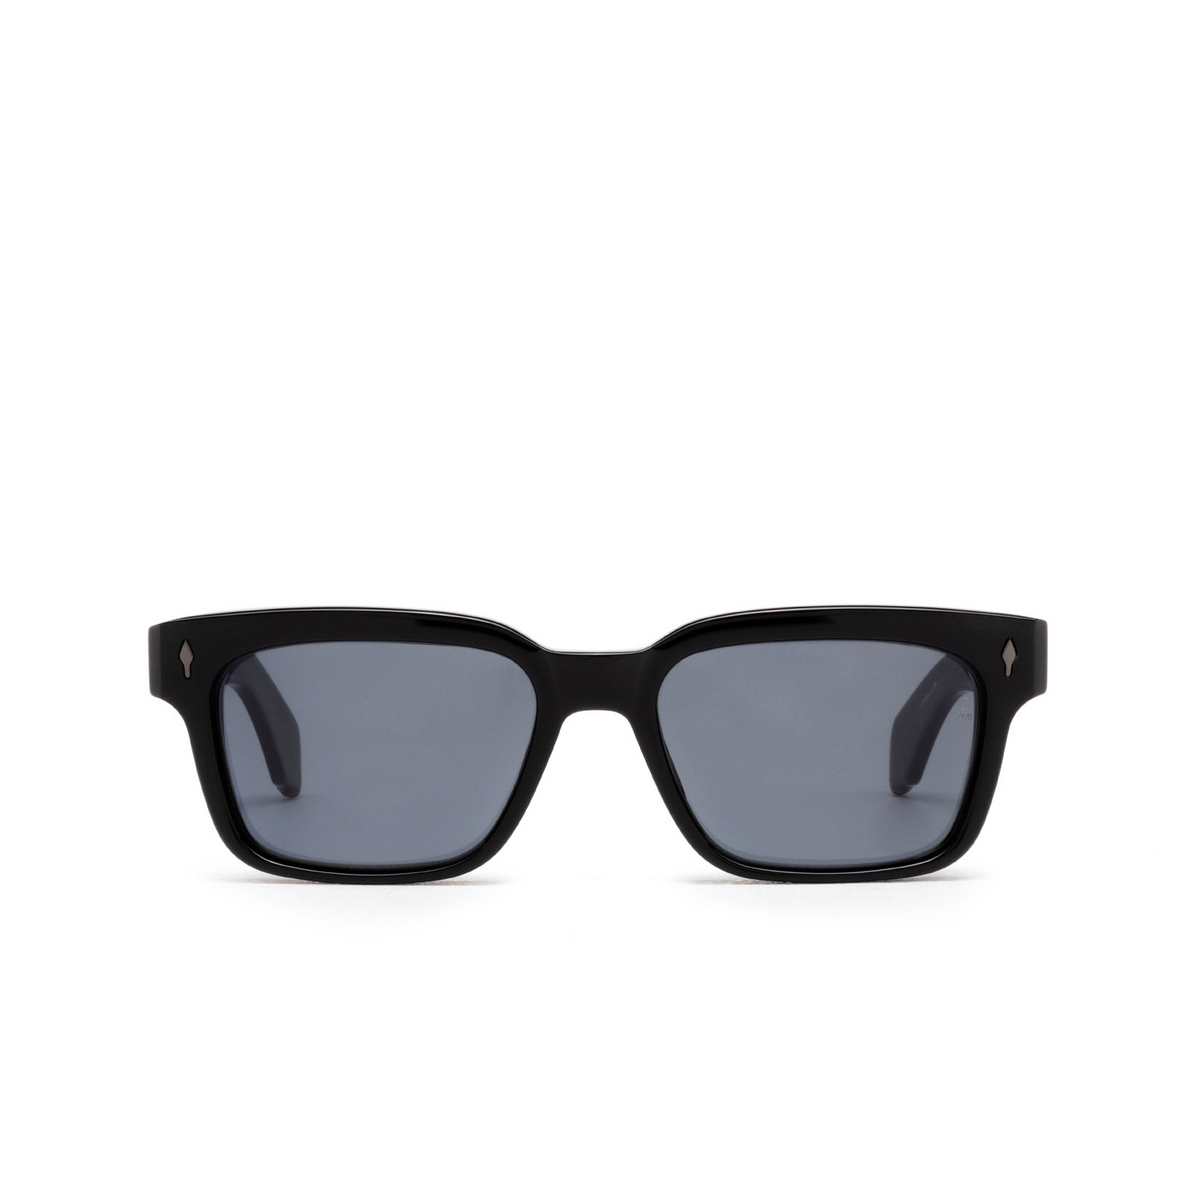 Jacques Marie Mage MOLINO 55 Sunglasses VANTA - front view